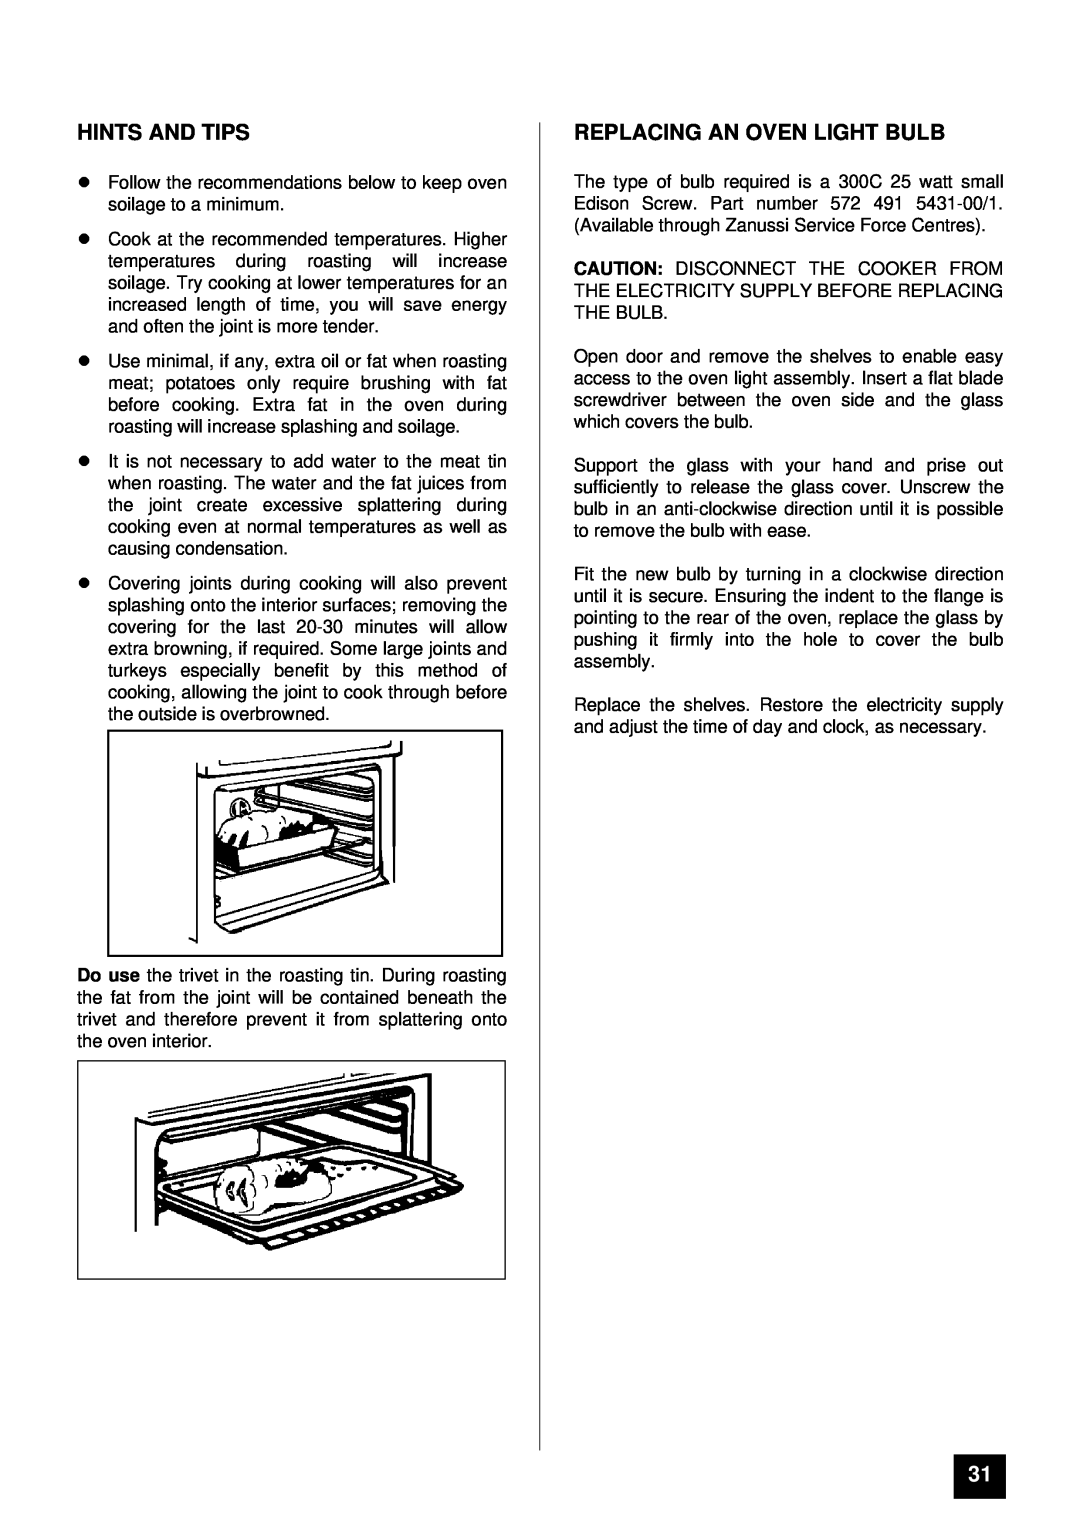 Zanussi ZDF867X manual Replacing An Oven Light Bulb, Hints And Tips 